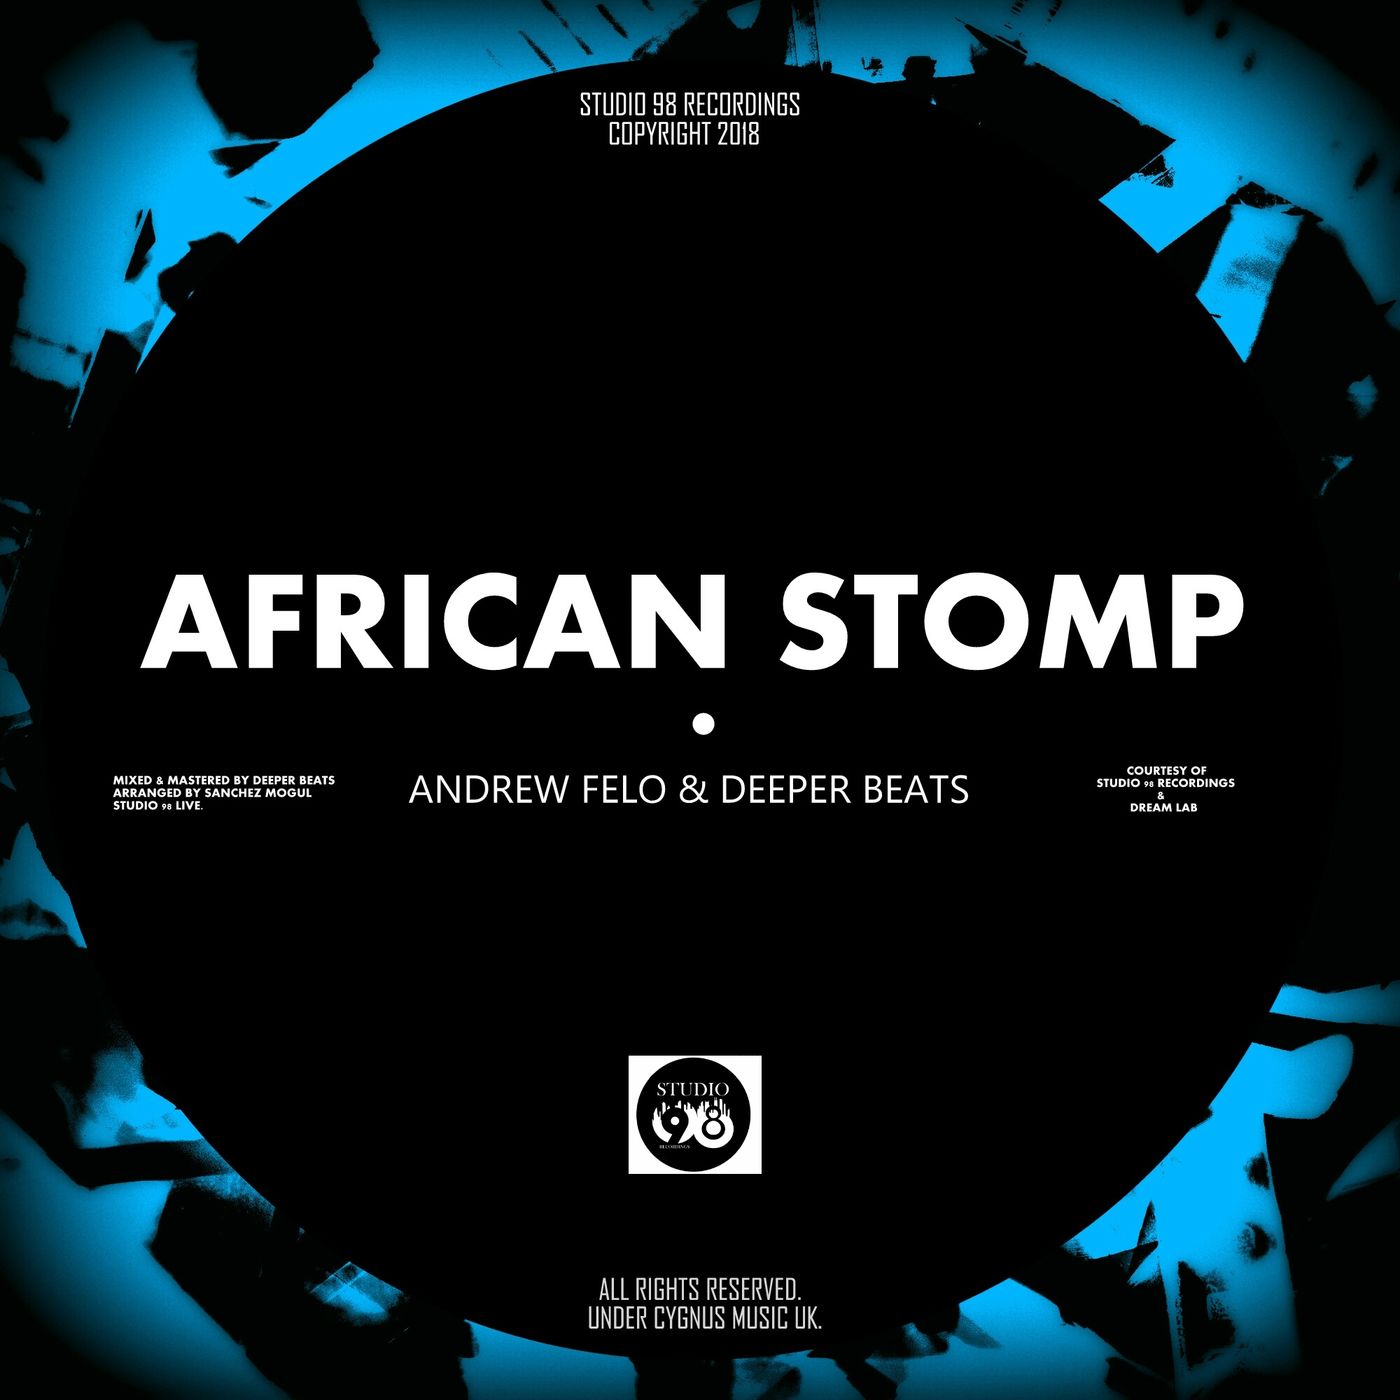 Andrew Felo & Deeper Beats - African Stomp / Studio 98 Recordings